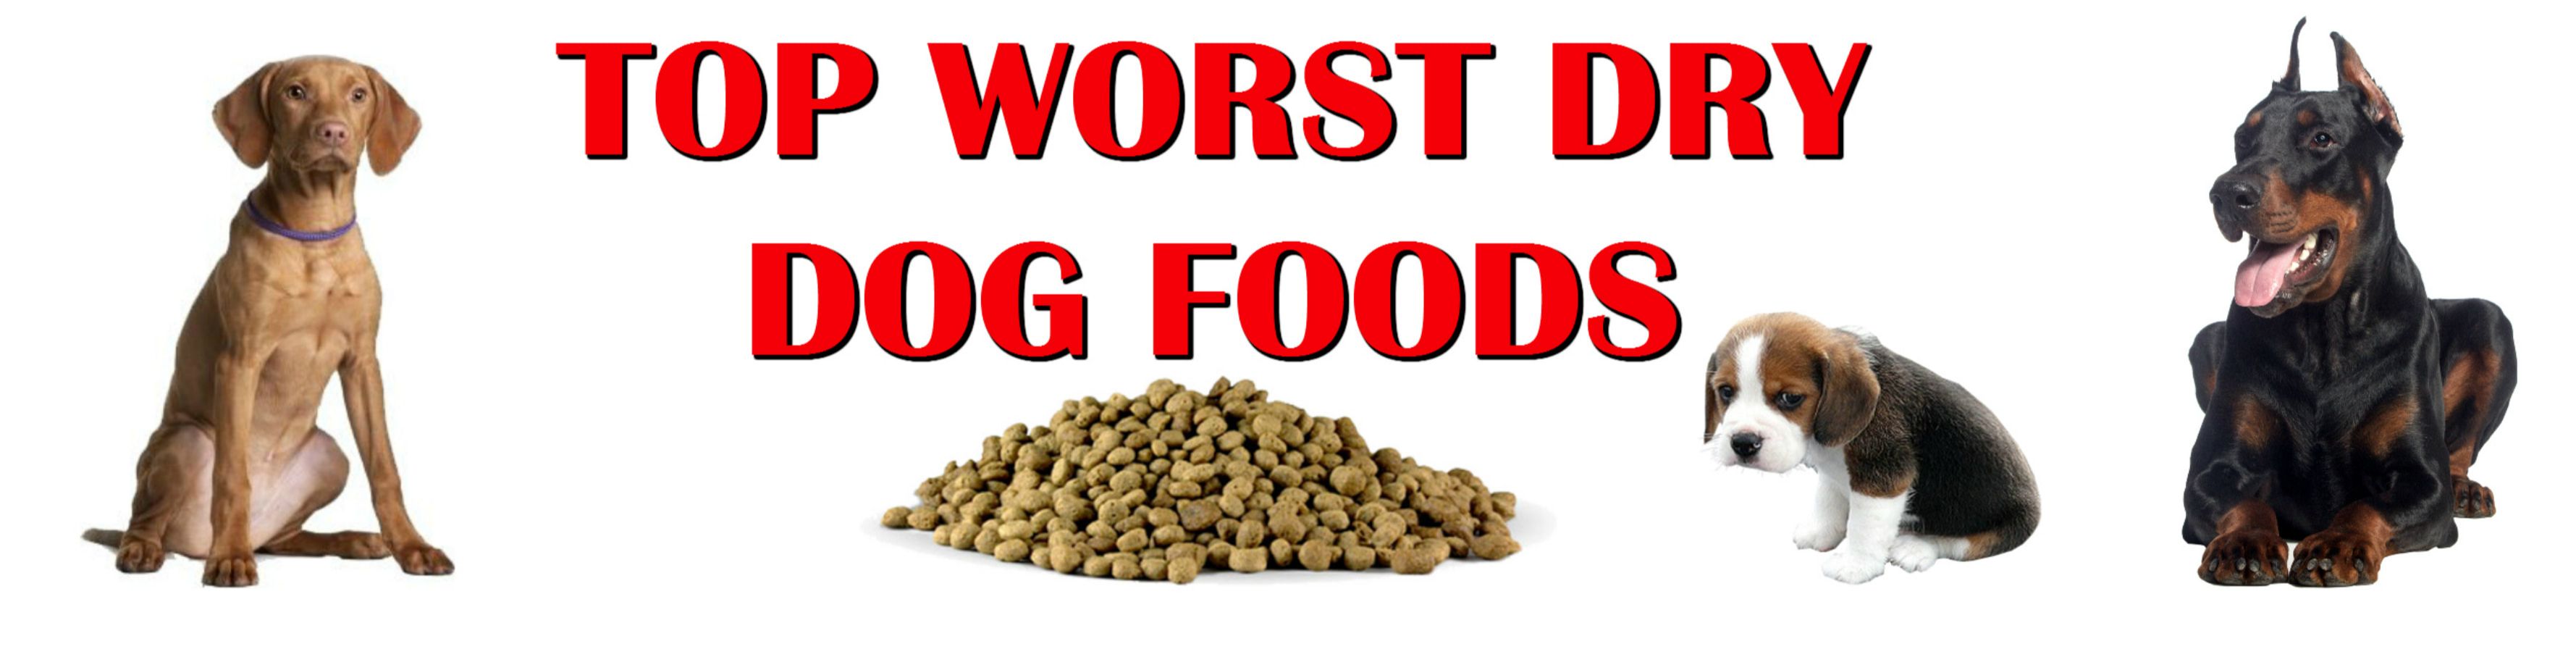 worst dog foods on the market